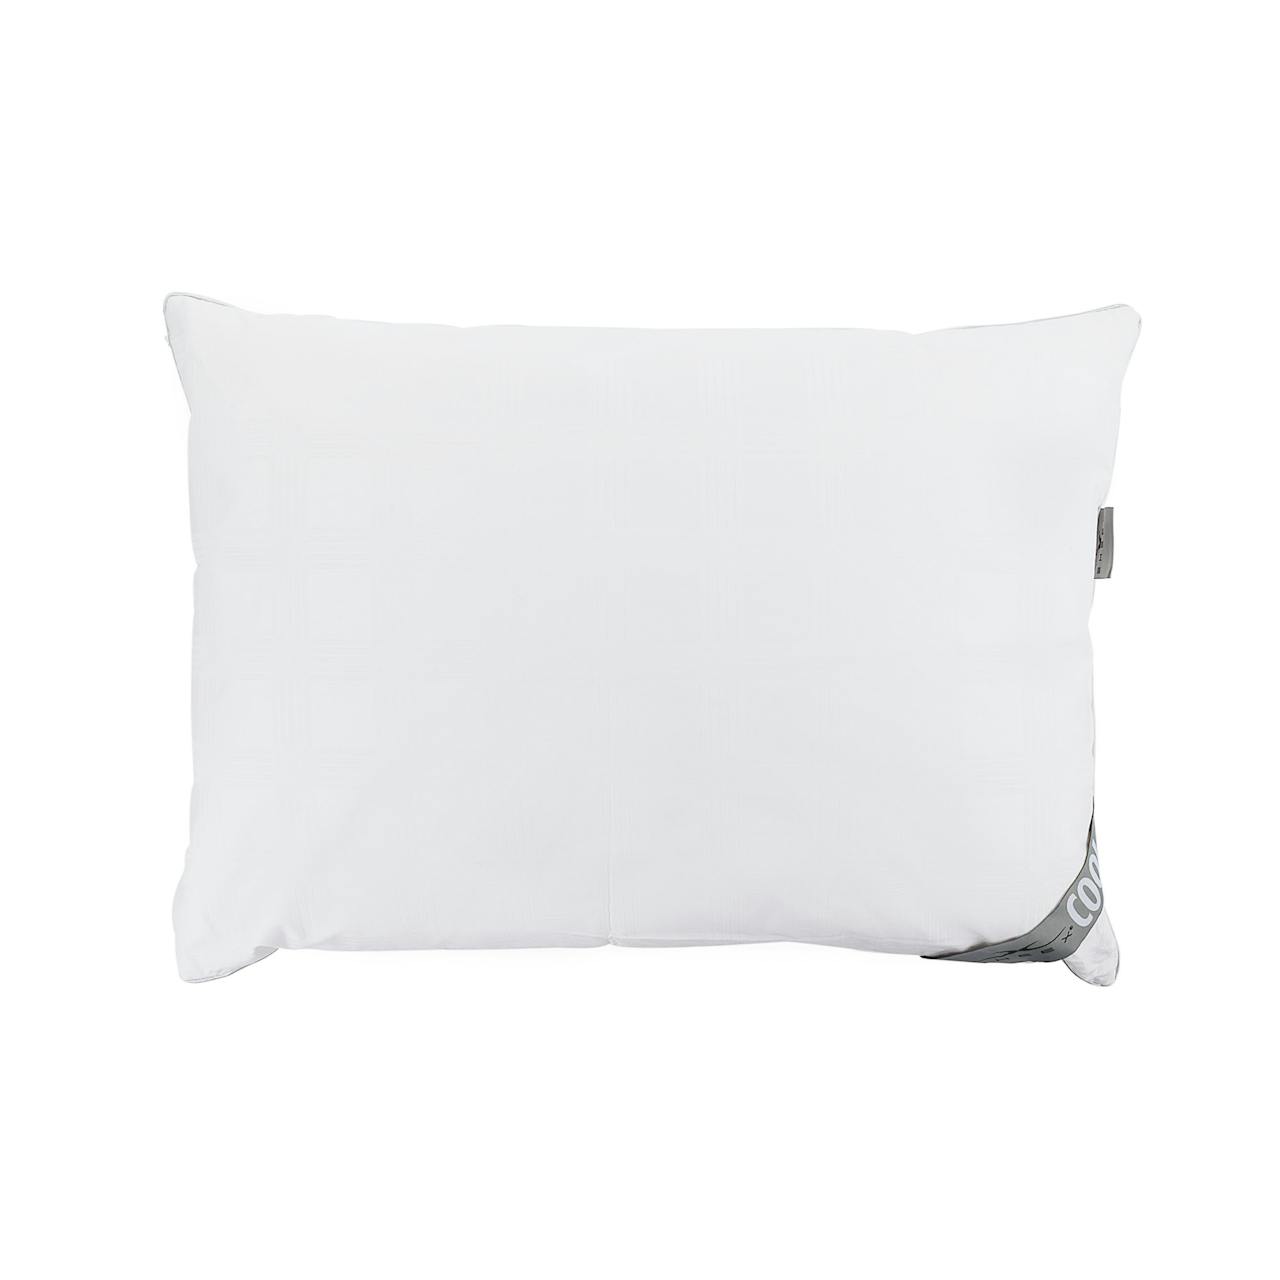 Sheex Climarelle Cooling Pillow - Standard